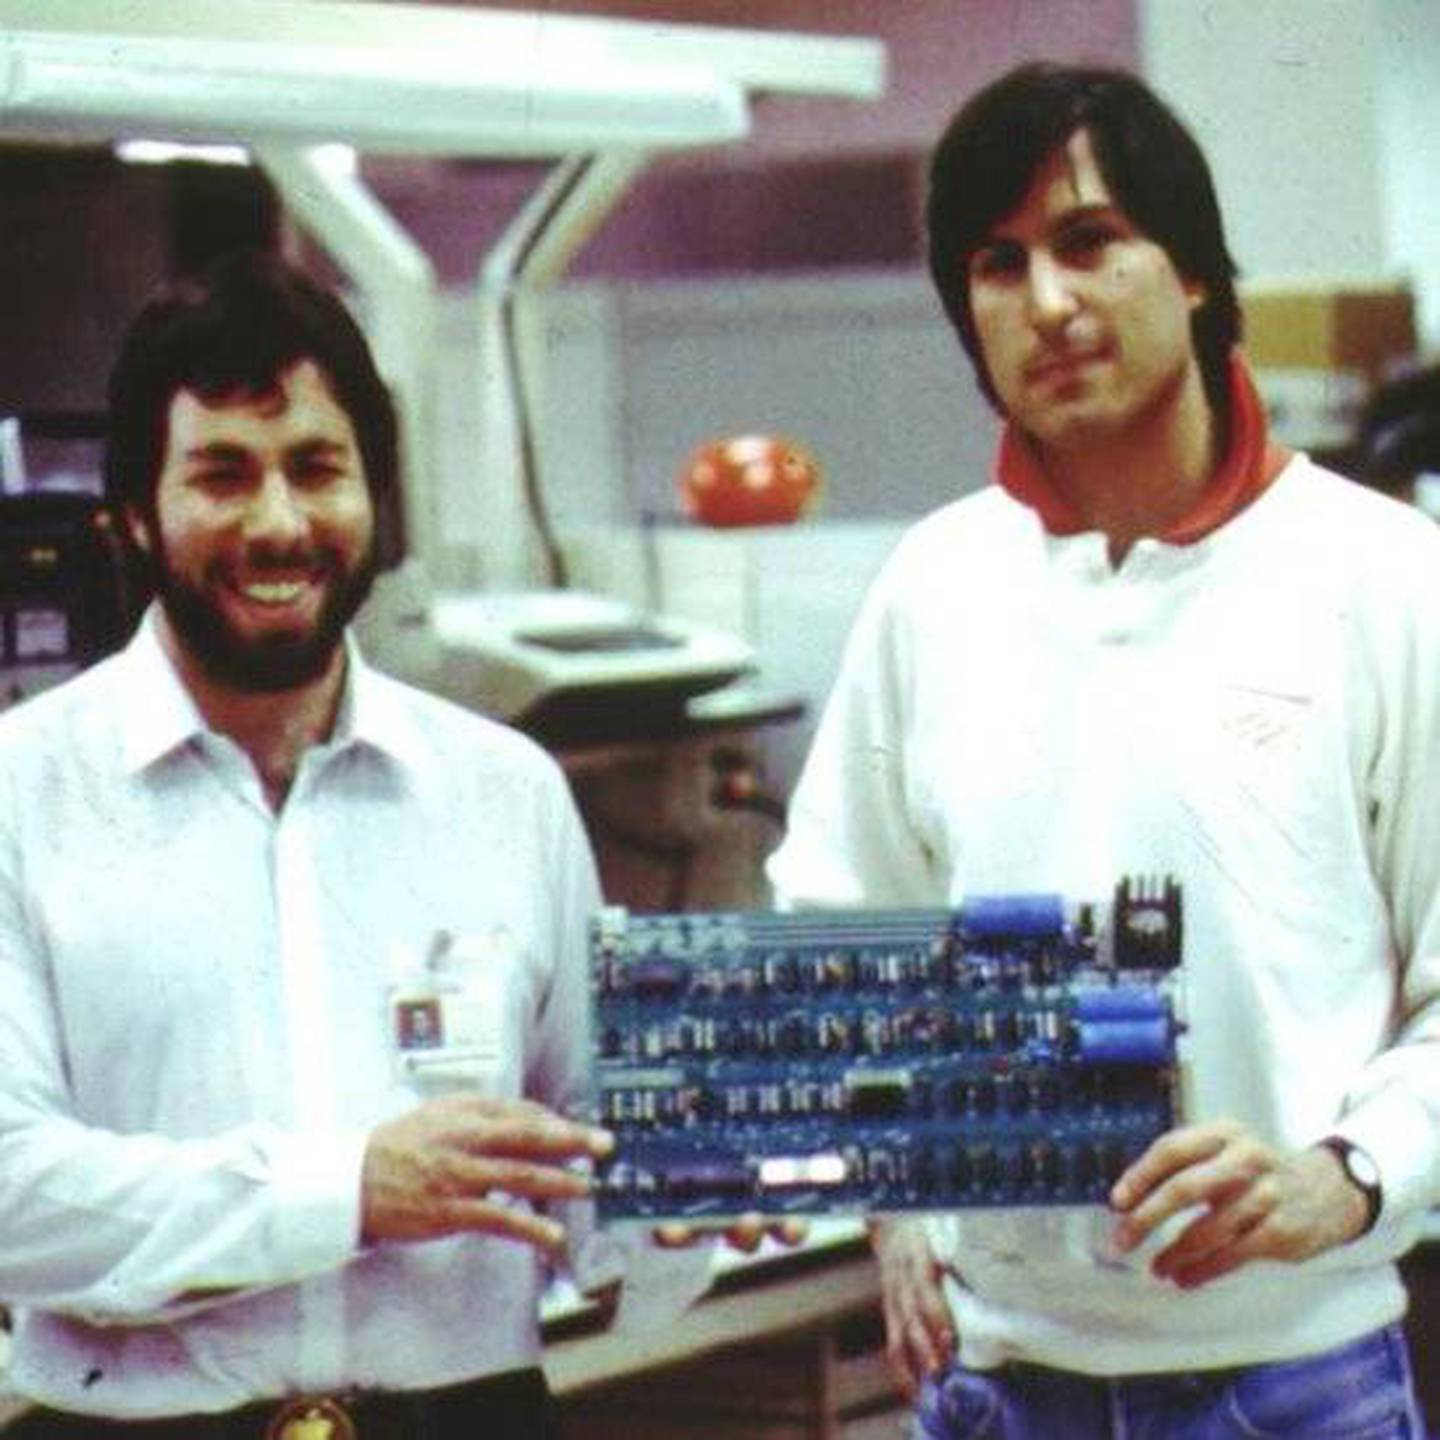 Apple: Why Steve Wozniak wasn't as popular as Steve Jobs?